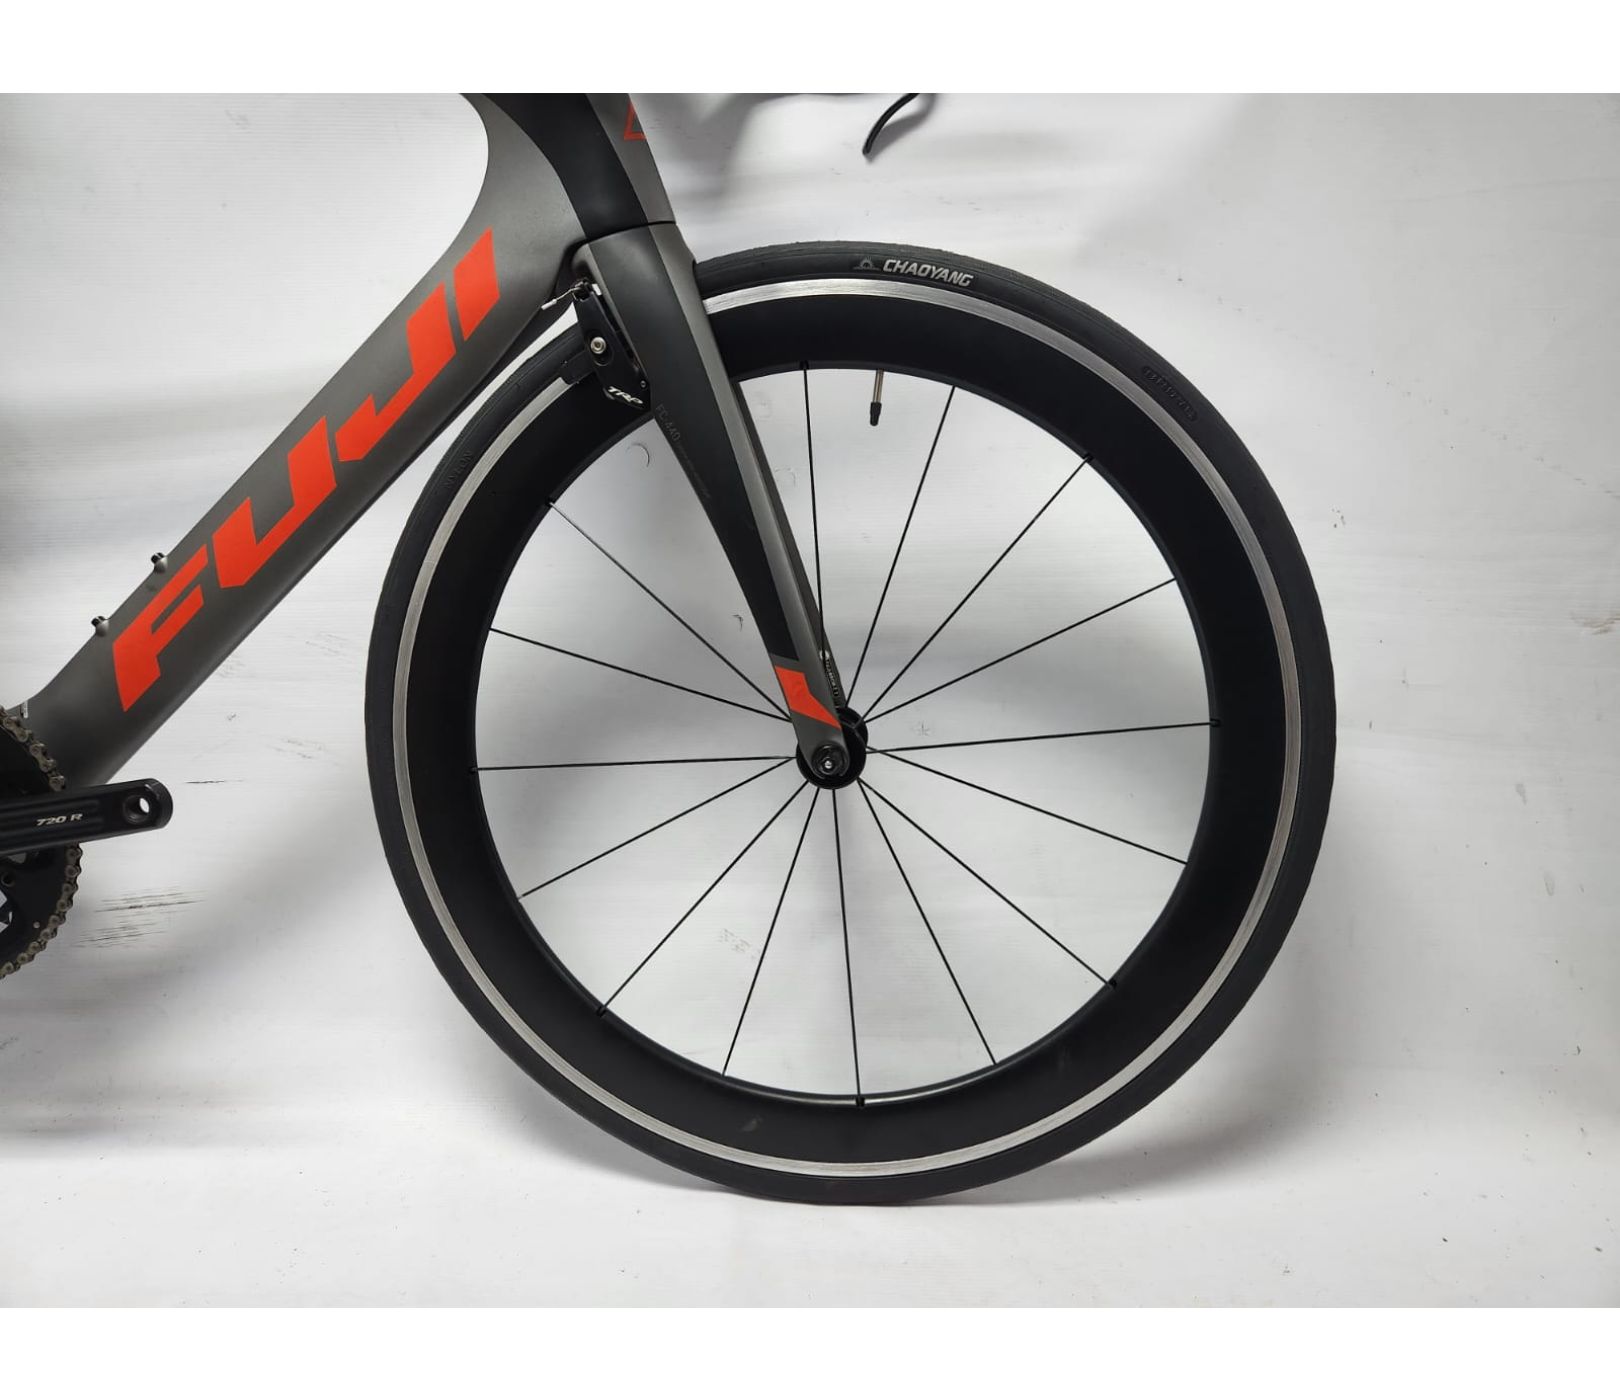 Pre-Owned Fuji Norcom 2.1 TT Carbon Road Bike - Medium/Large